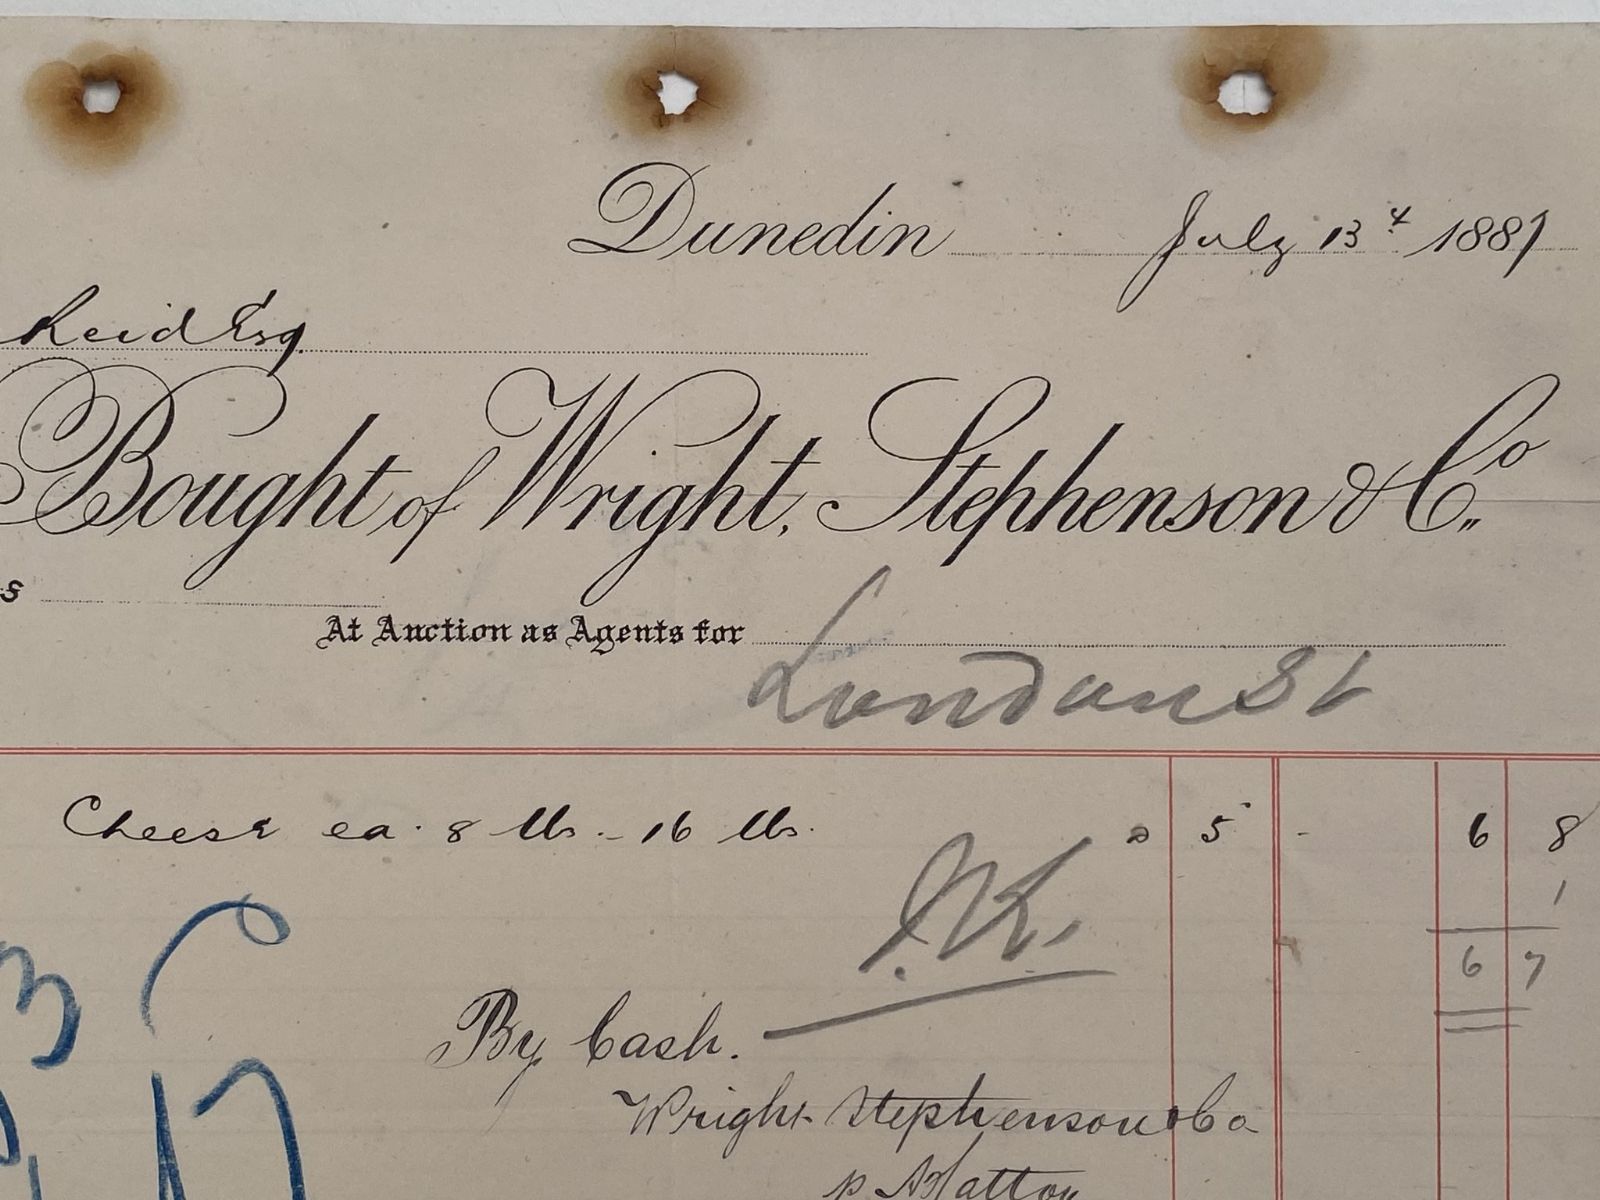 ANTIQUE INVOICE: Wright & Stephenson & Co, Dunedin - Auction Agents, 1887